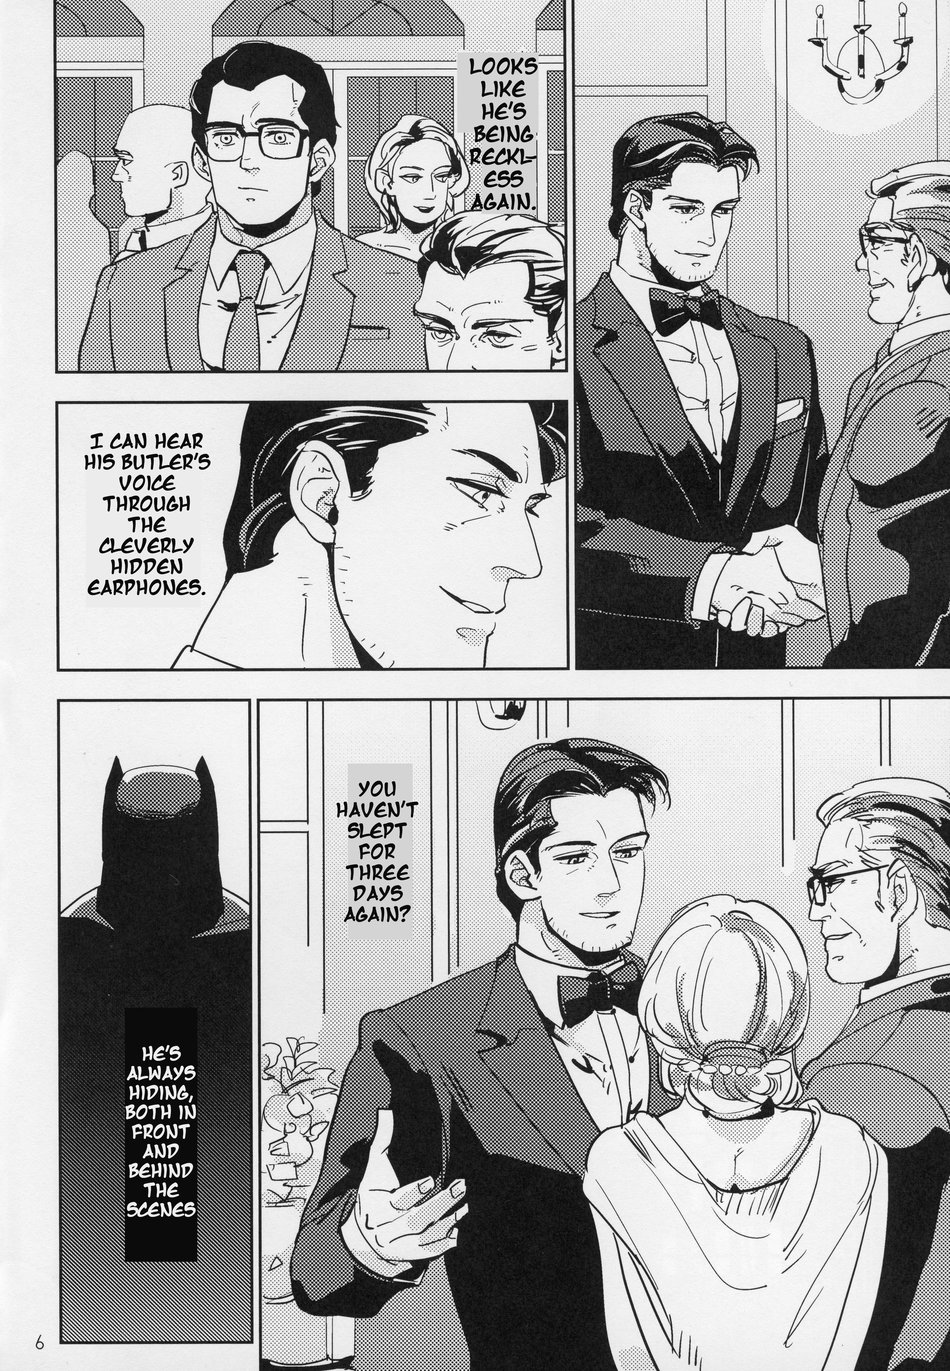 Umesyu うめしゅ DC Comics Hard Work Hero Superman Clark Kent x Batman Bruce Wayne